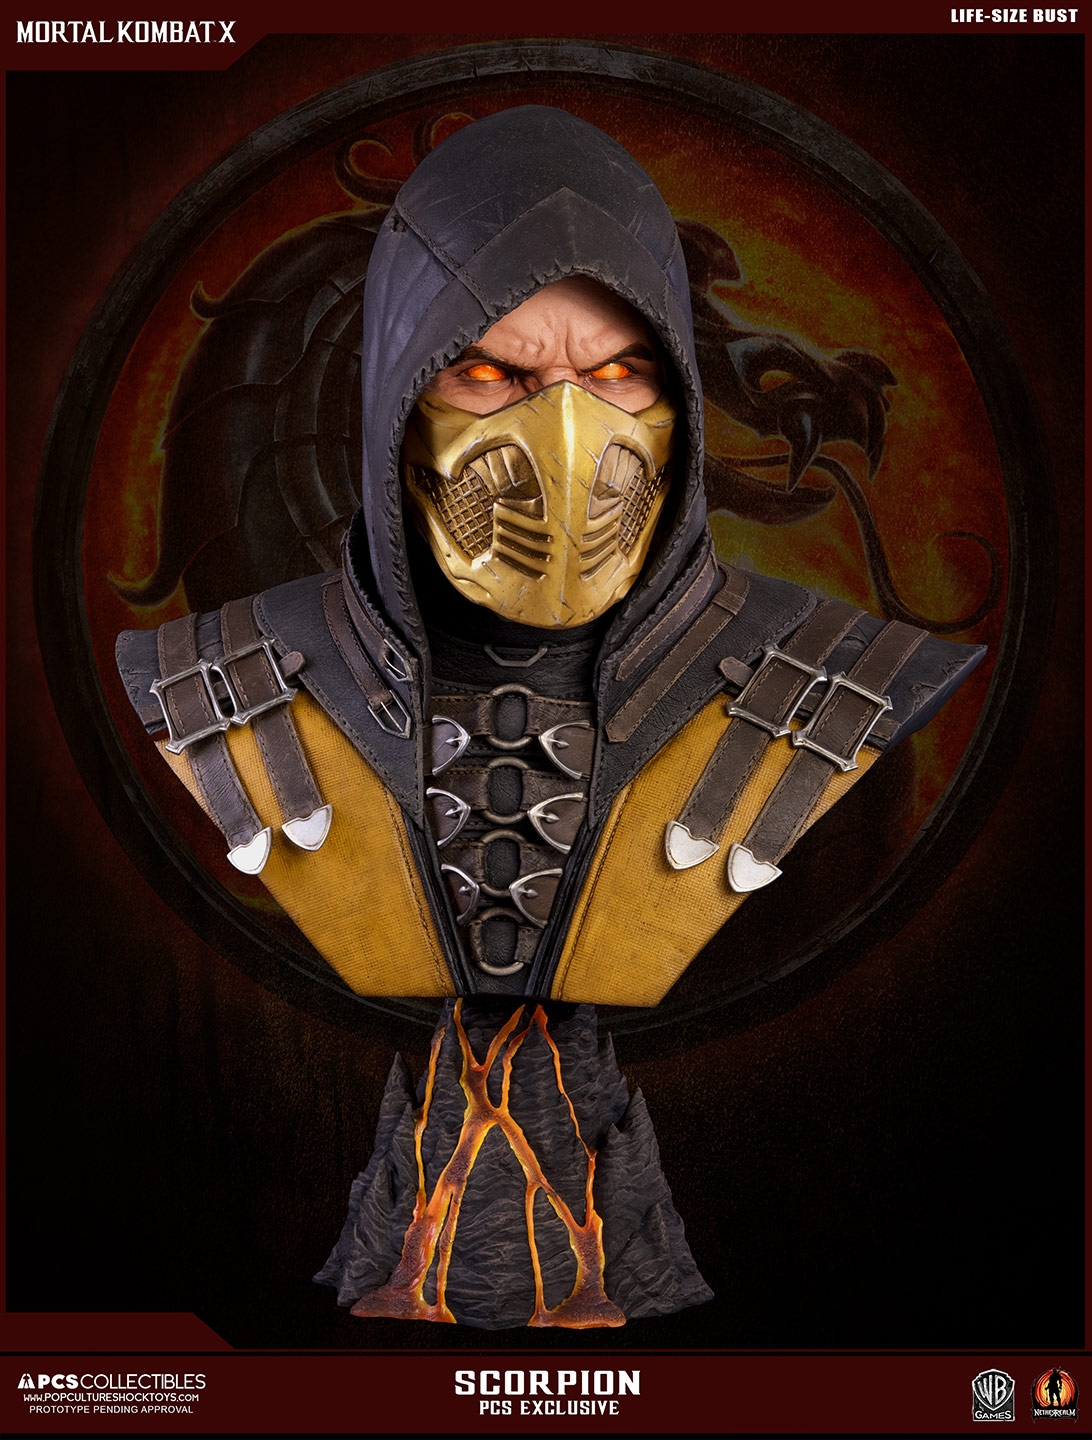 Scorpion-Bust-Pop-culture-Shock-Mortal-Kombat-X-exclusive-006.jpg